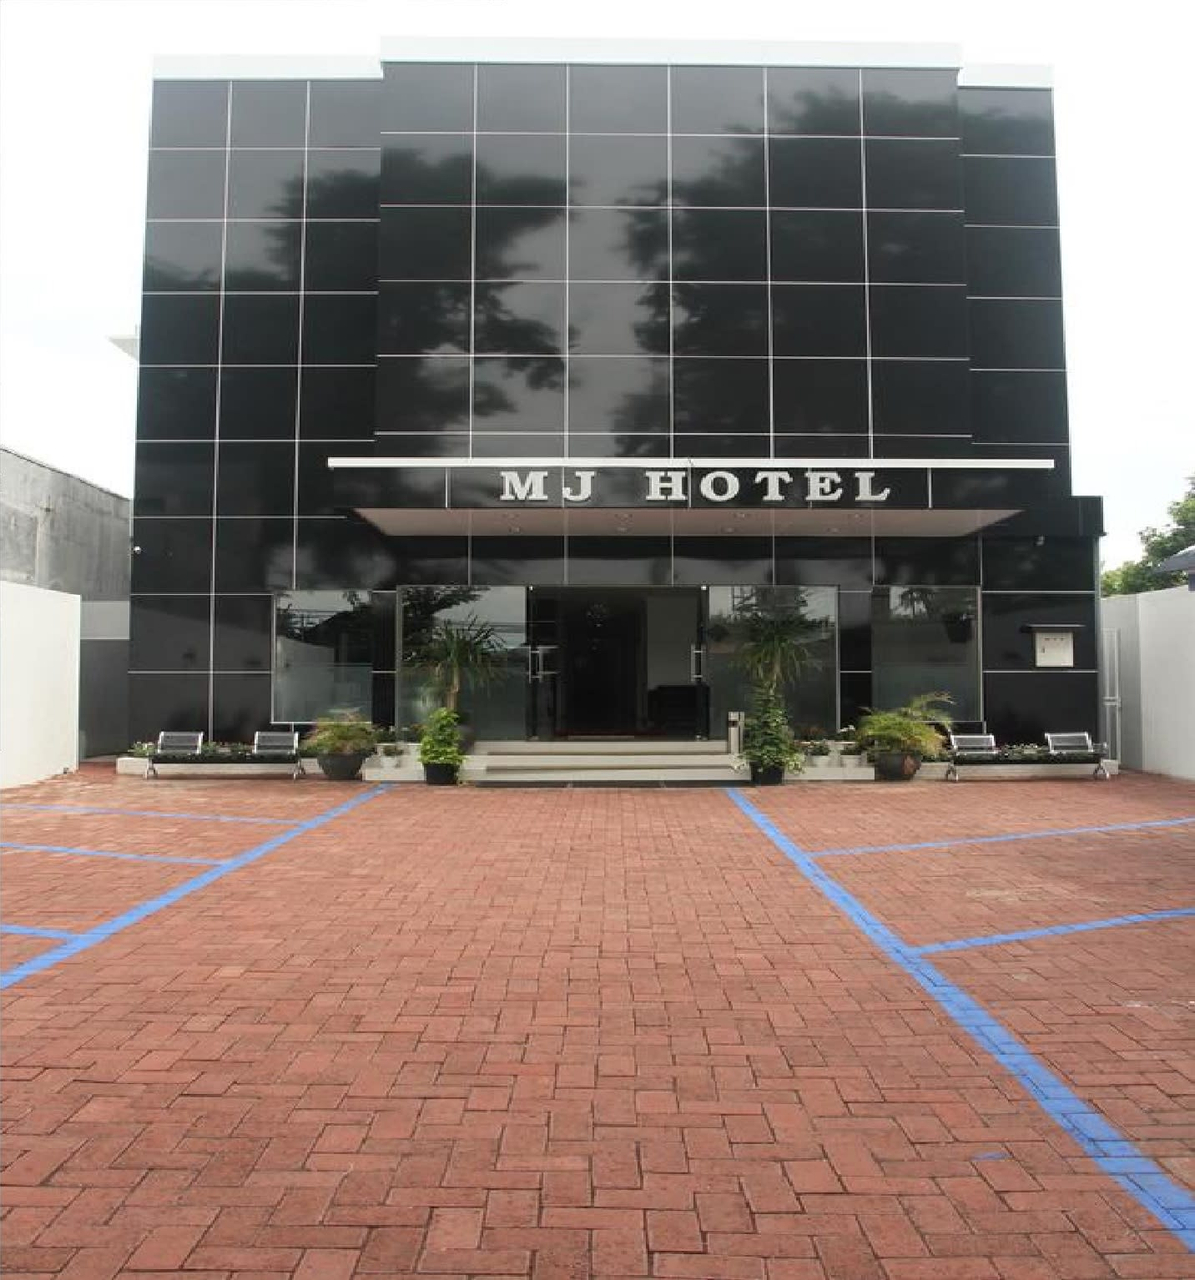 MJ Hotel Syariah Mojokerto, Mojokerto